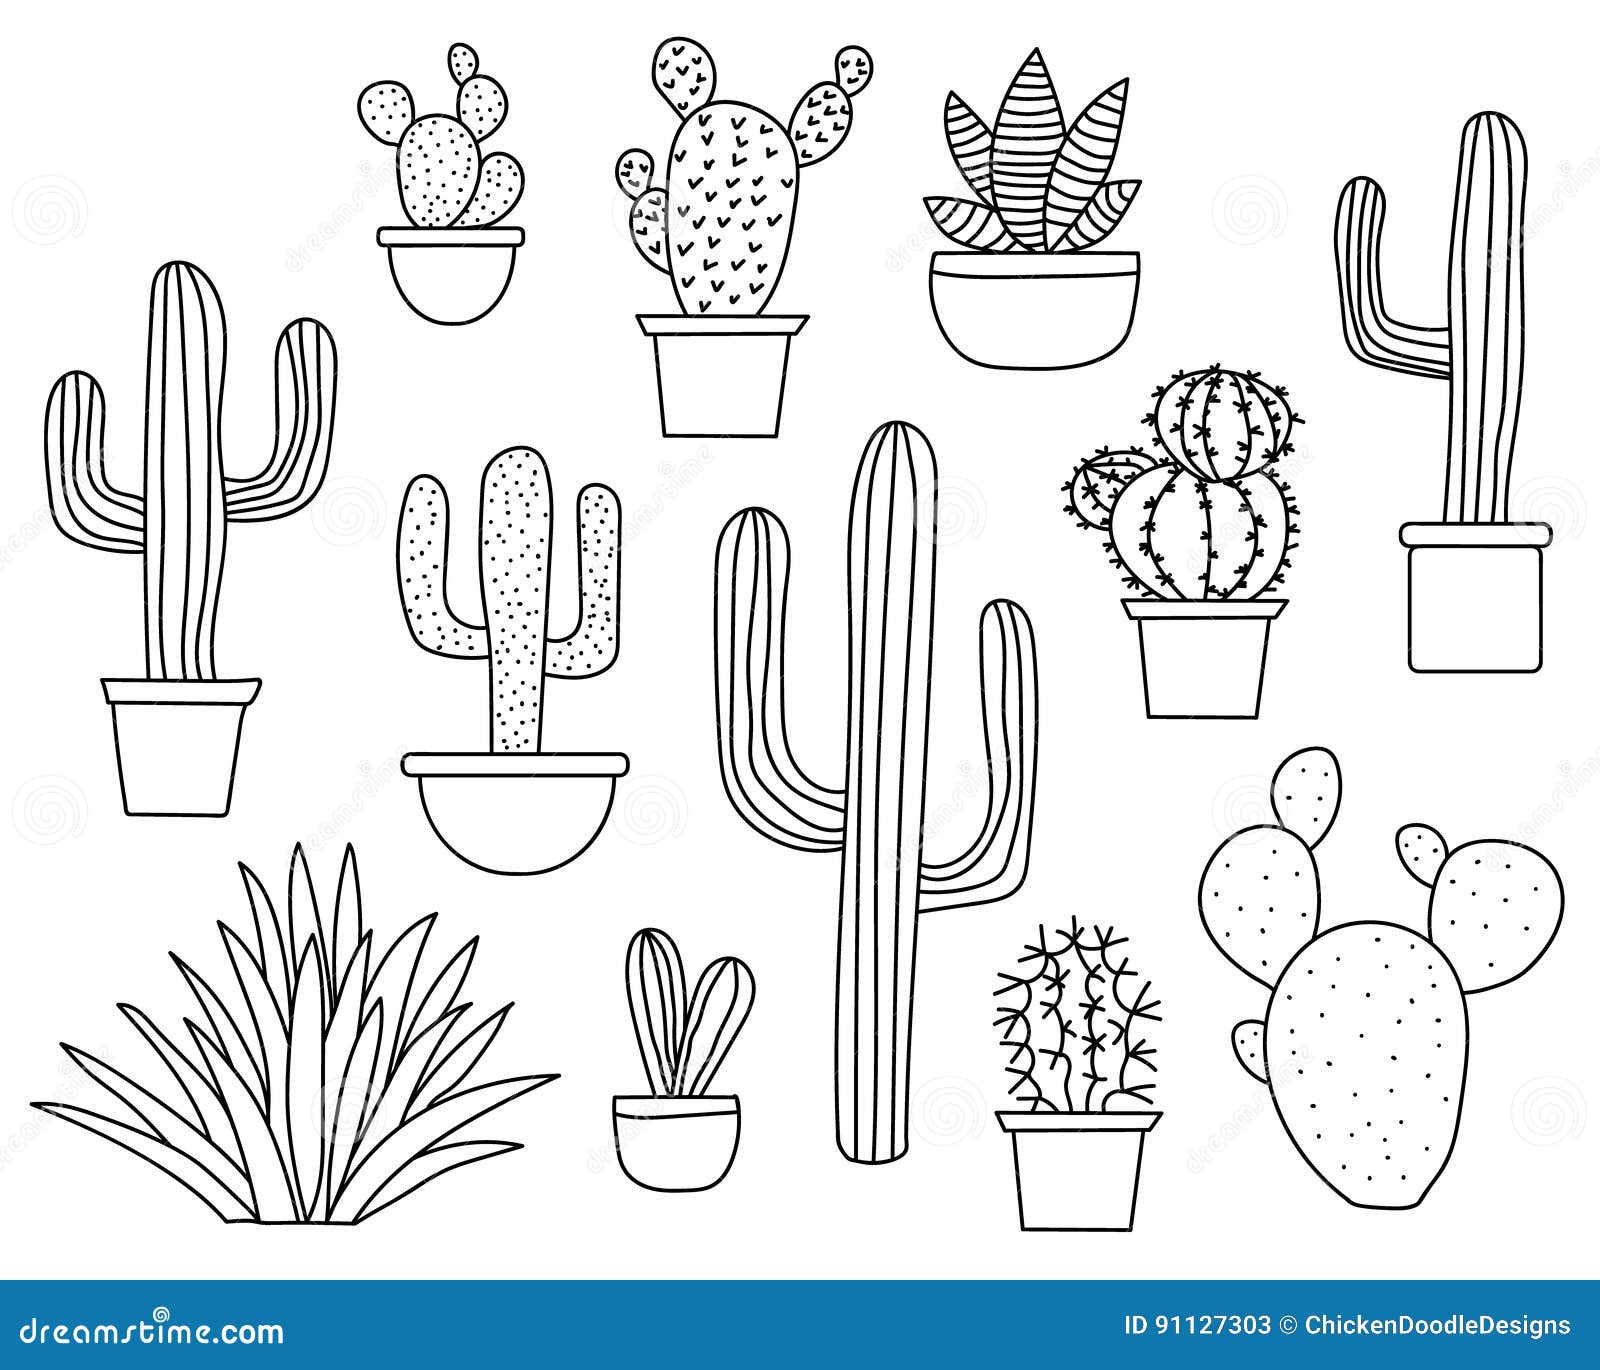 Hand Drawn Cactus Design Vector Download